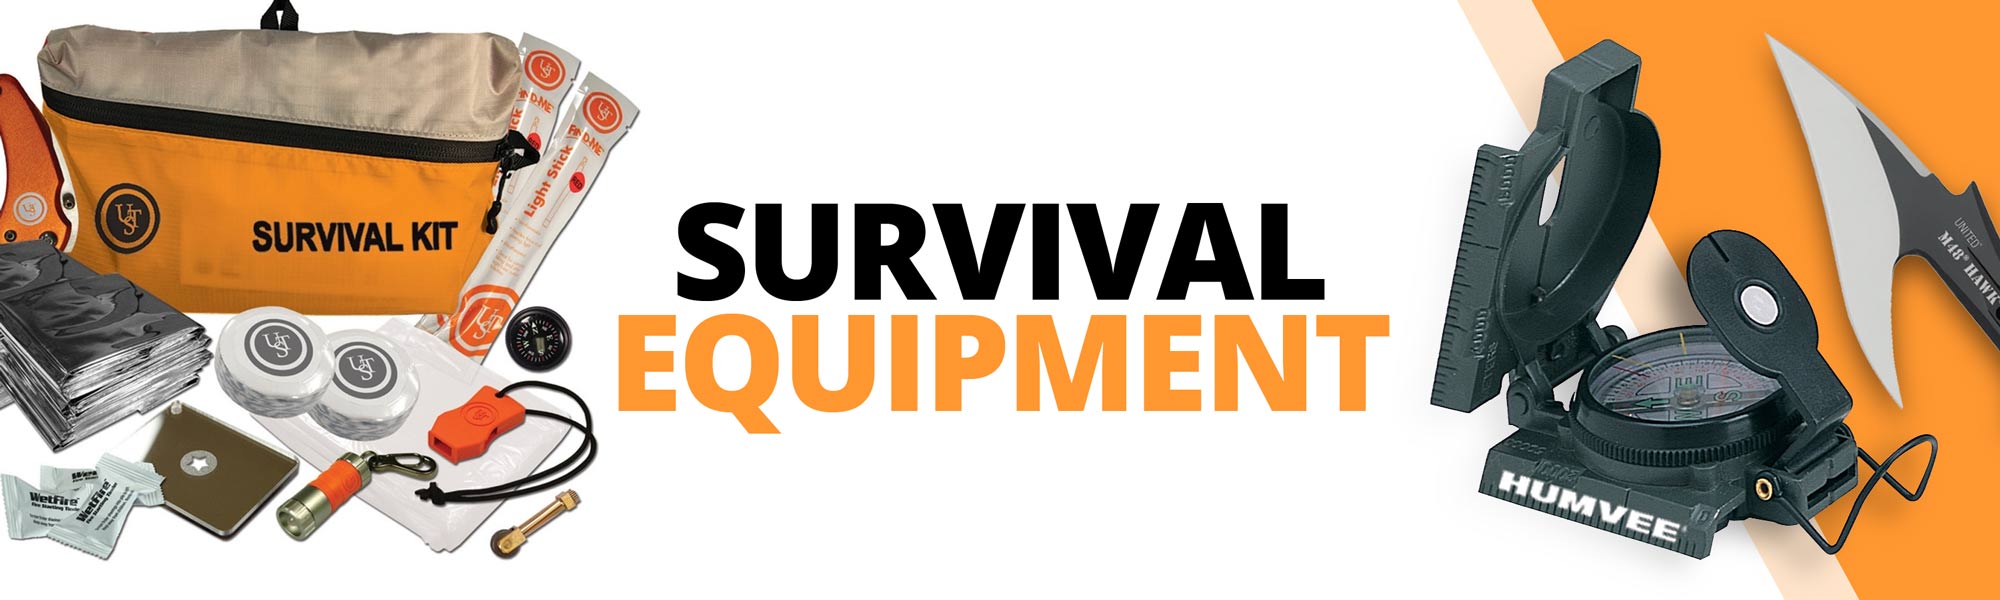 Survival Supplies Australia, Survival Gear & Equipment